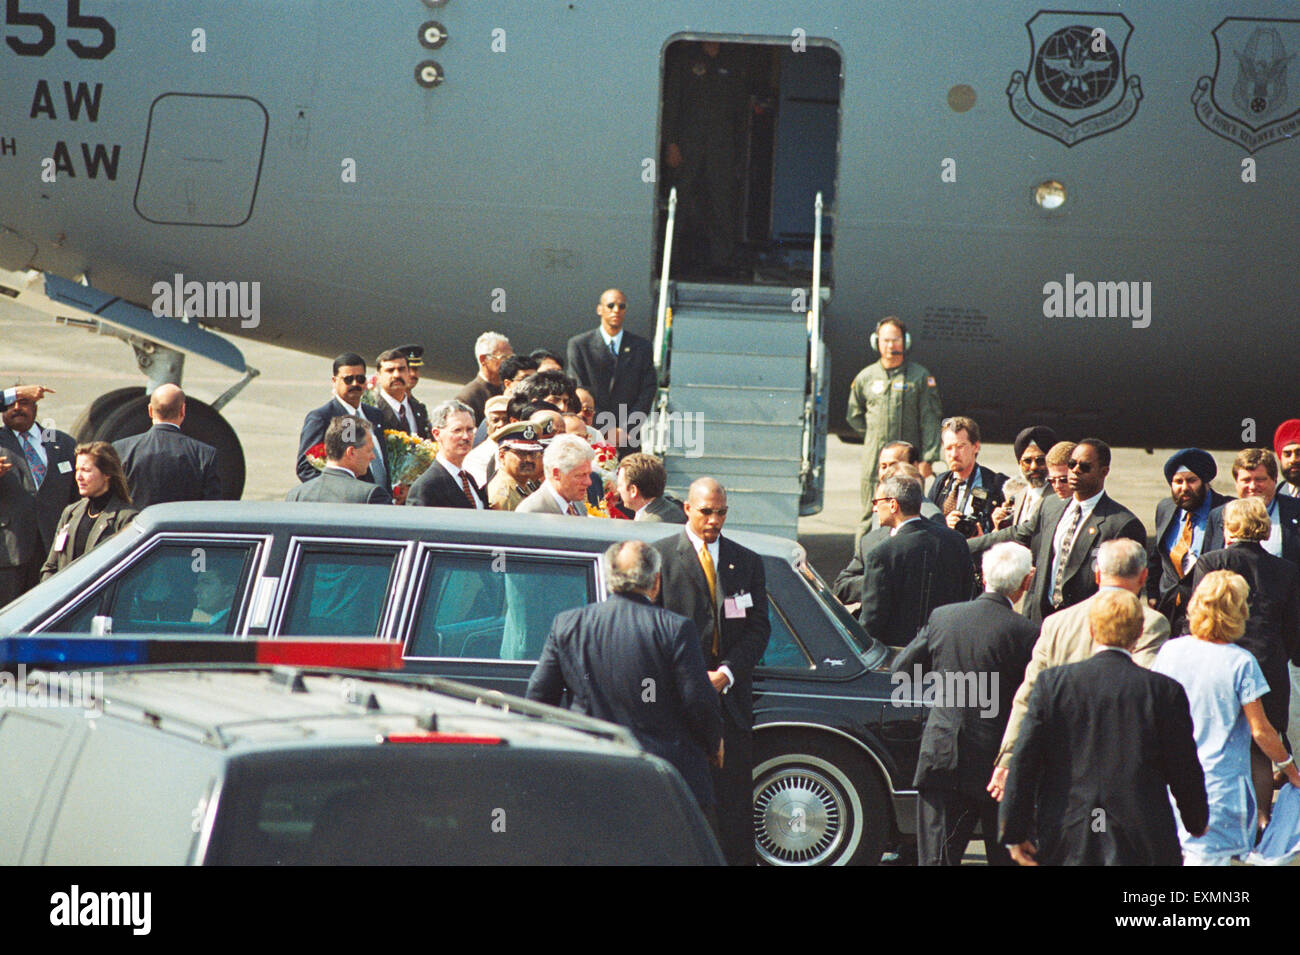 Le président américain Bill Clinton U.S. Air Force avion départ de l'aéroport international Chhatrapati Shivaji Maharaj Bombay Mumbai Maharashtra Inde Banque D'Images